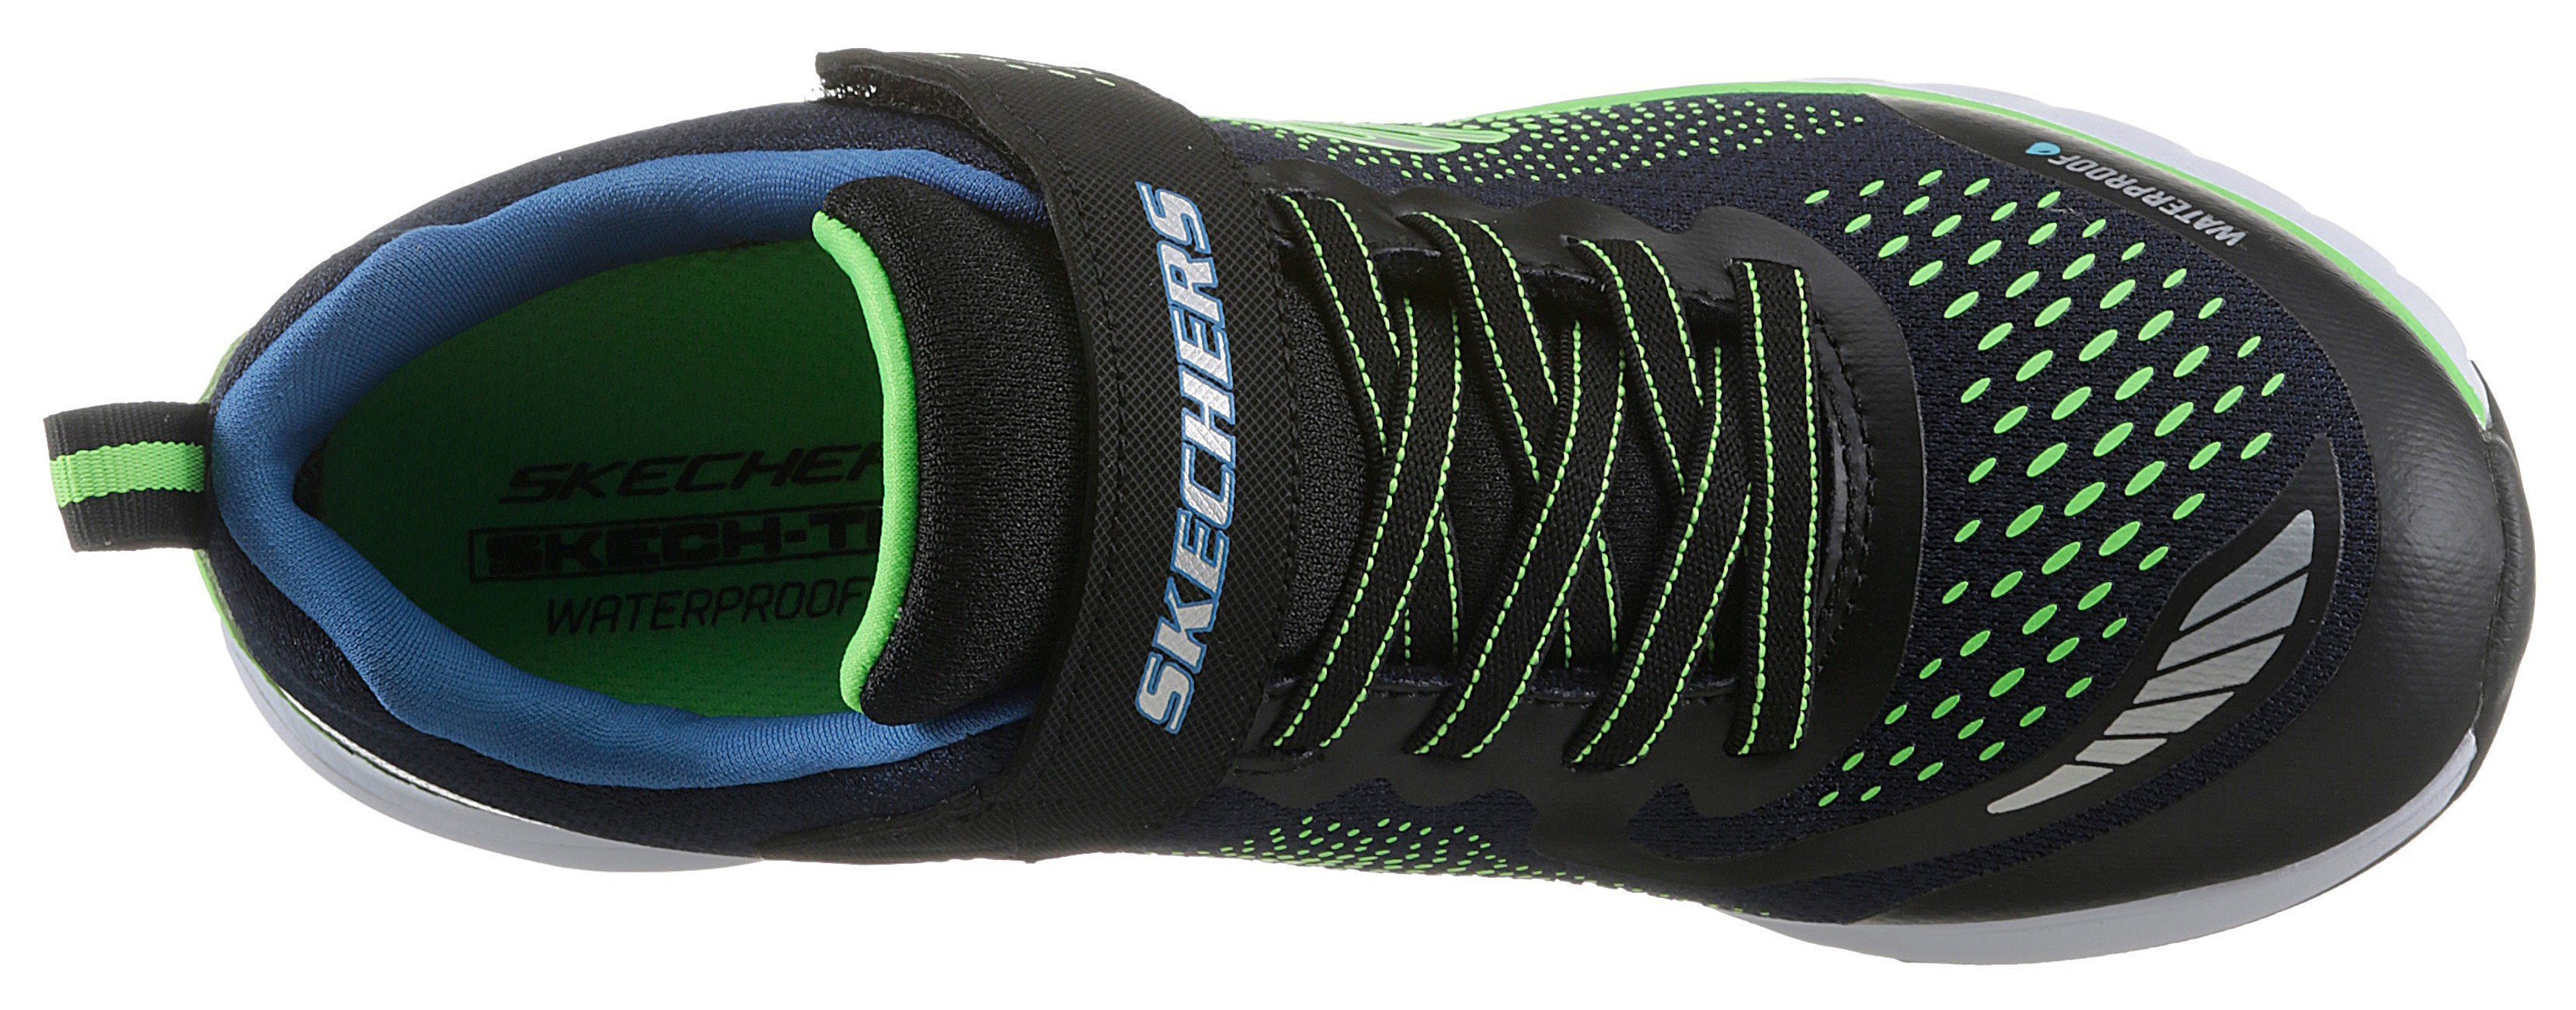 Waterproof-Ausstattung mit Sneaker Kids navy-schwarz Skechers ULTRA GROOVE